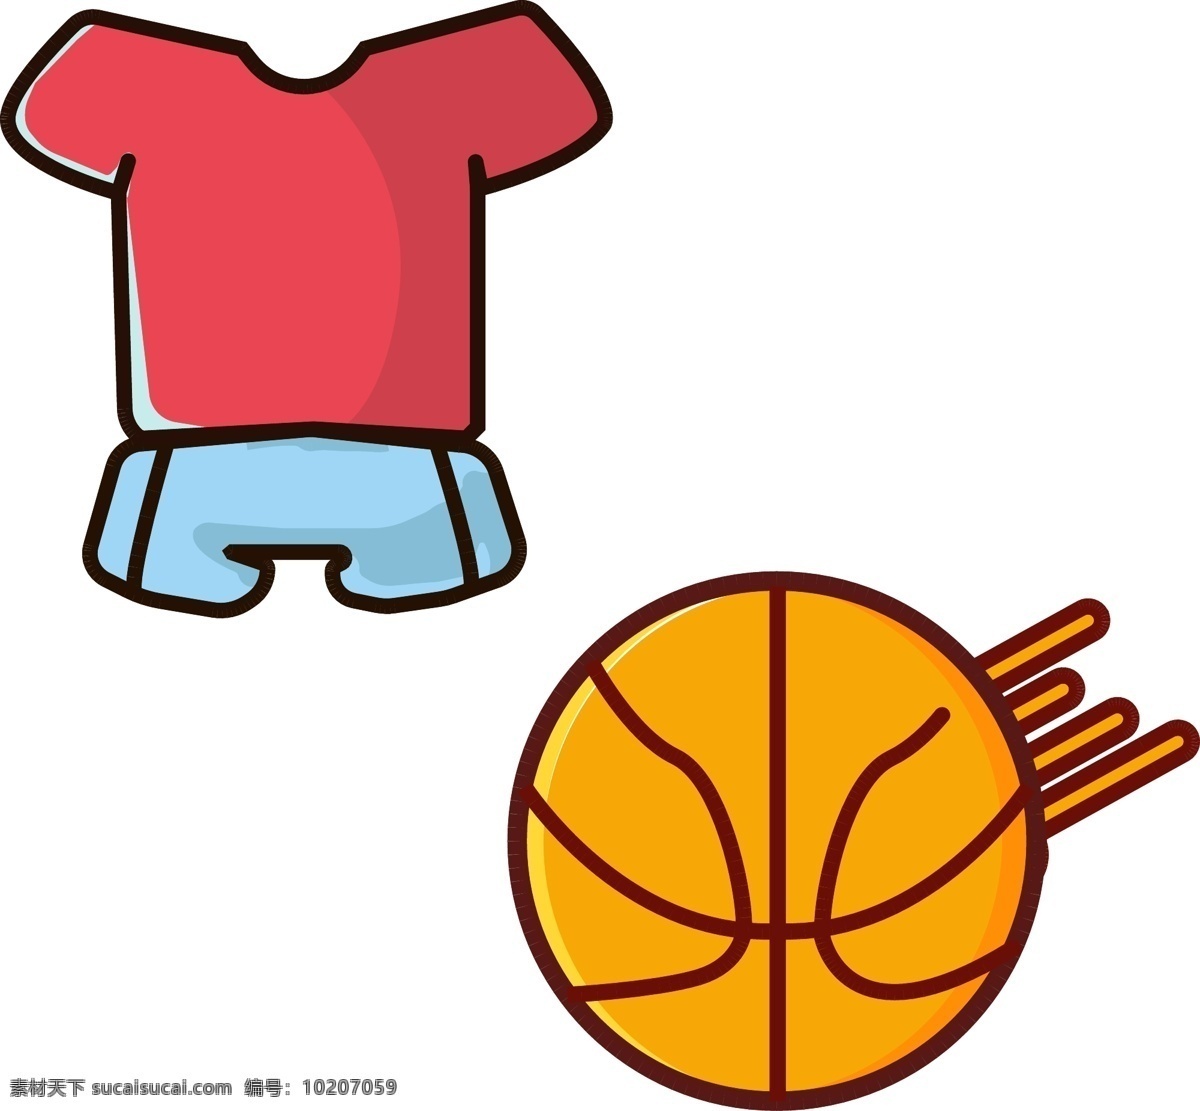 meb 可爱 卡通 篮球 球衣 ai素材